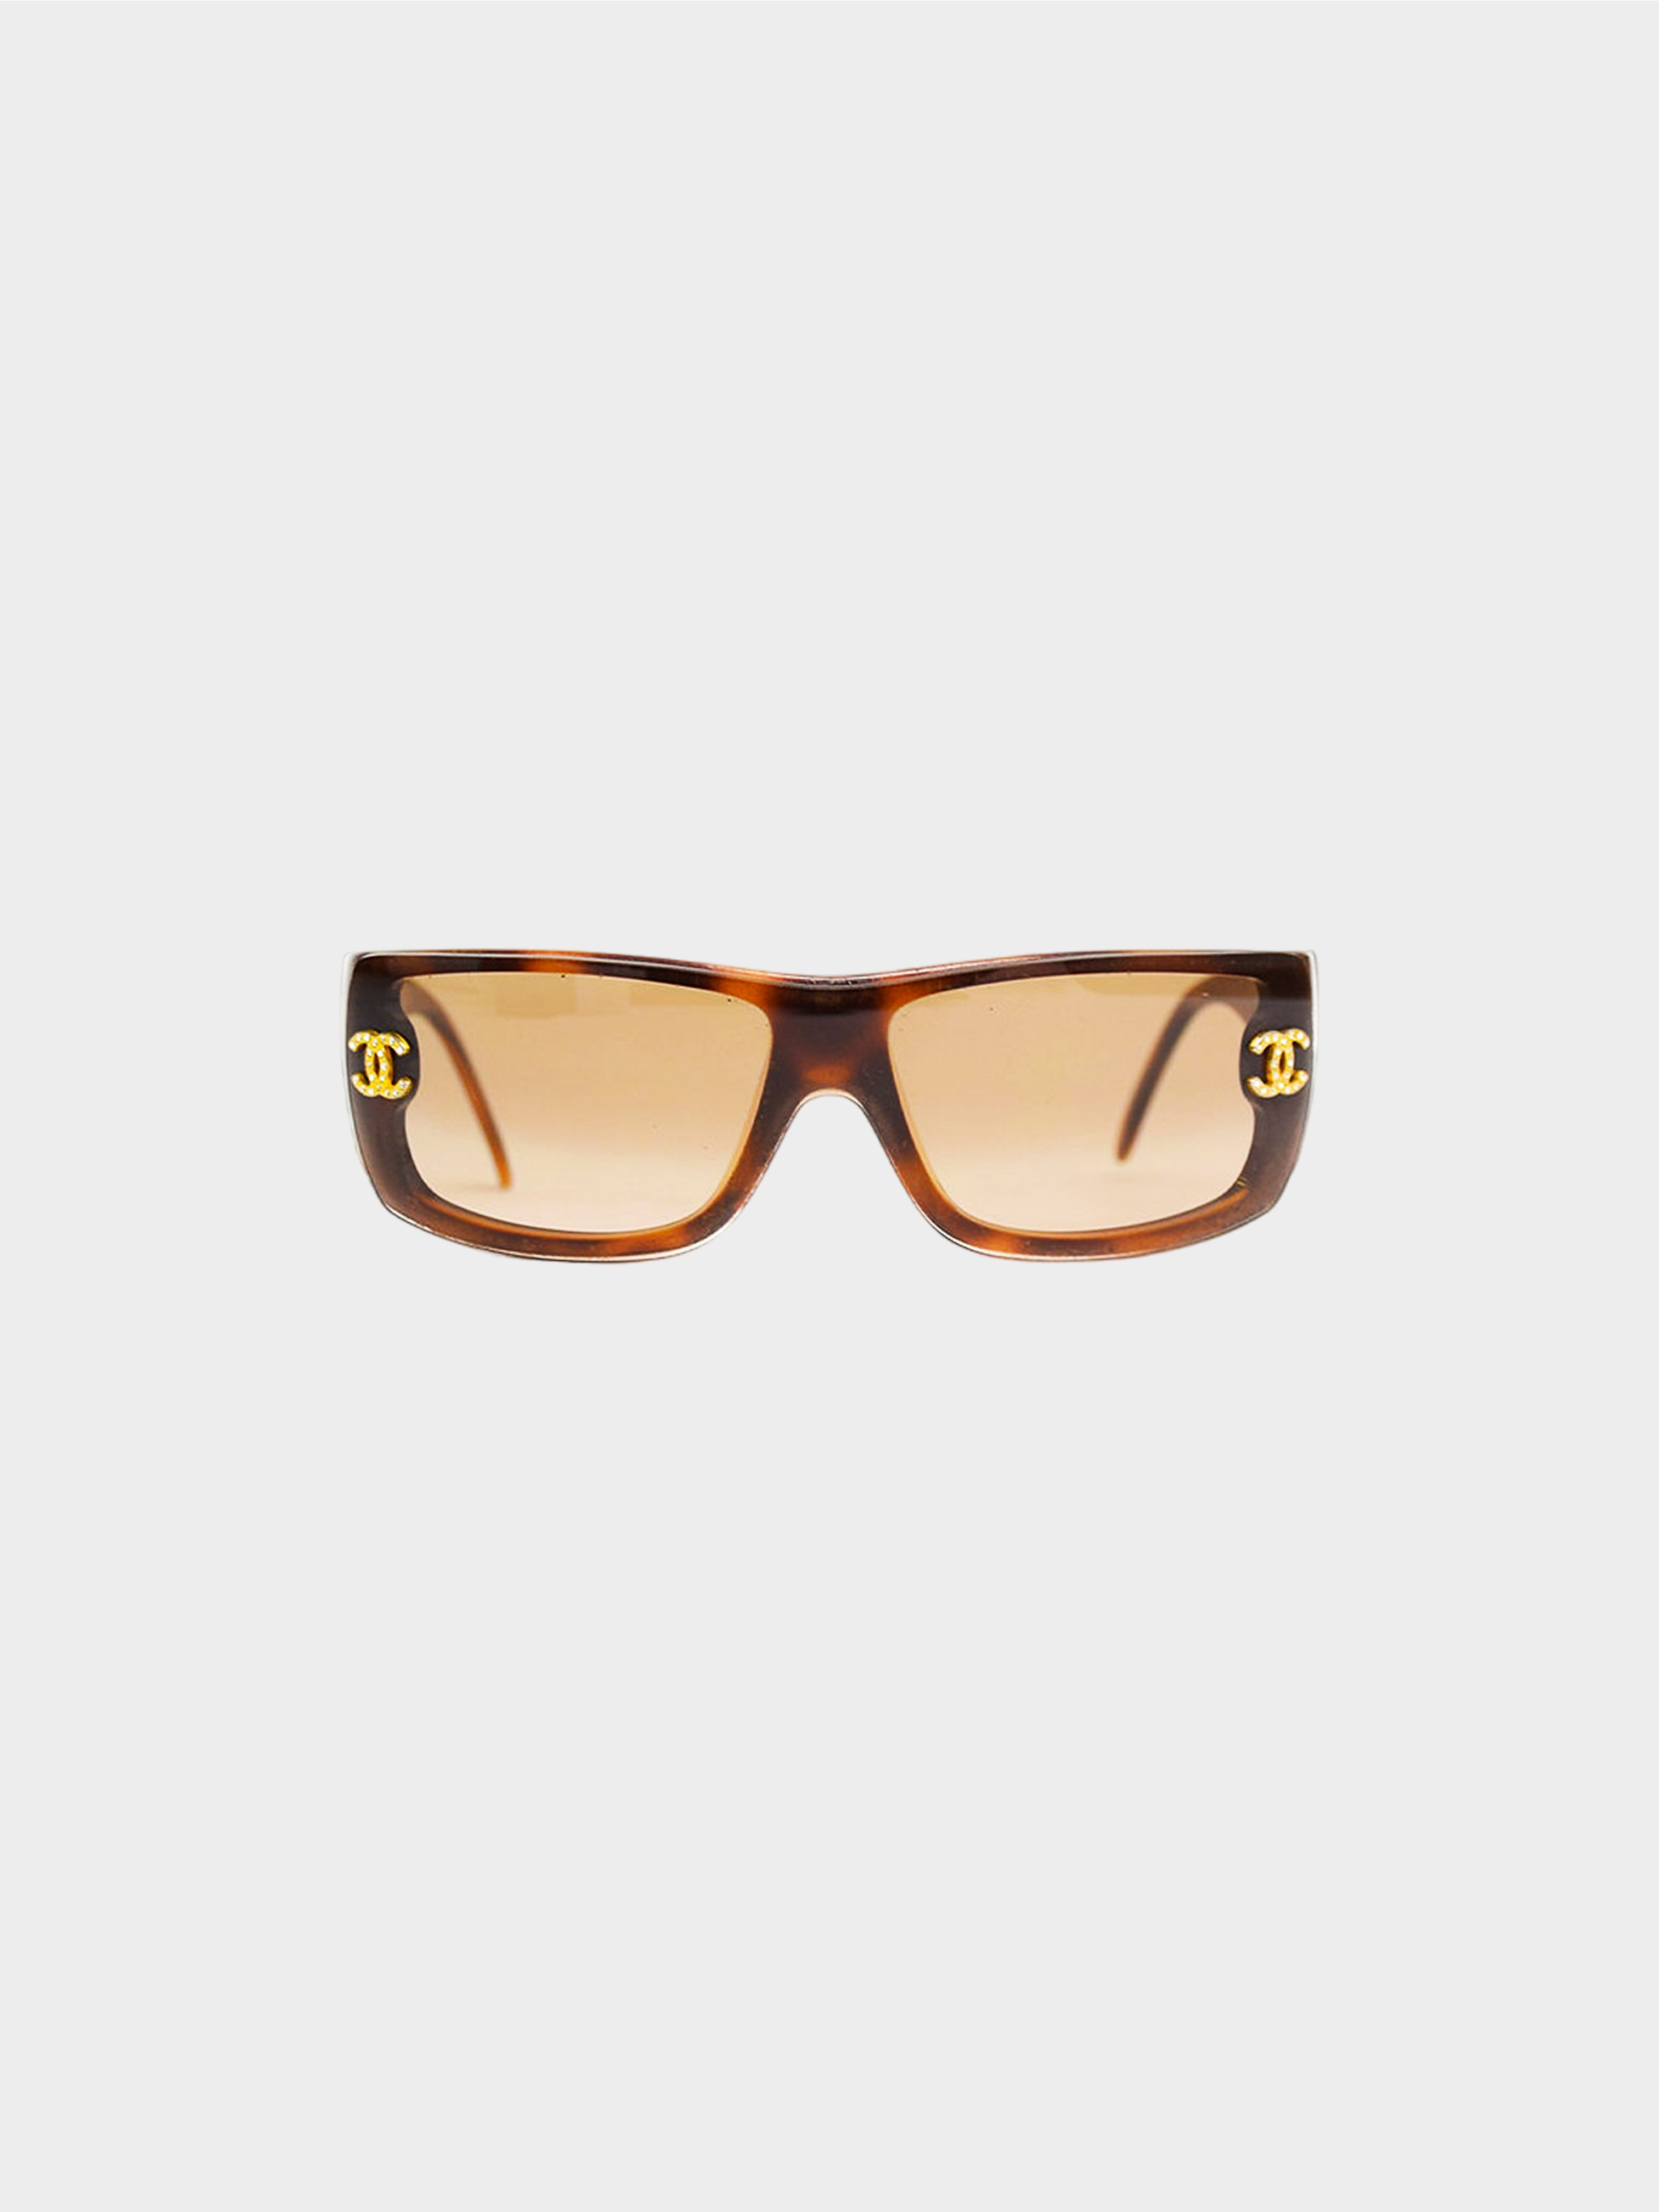 Chanel 2000s Brown Tortoise Sunglasses with Rhinestones Logo